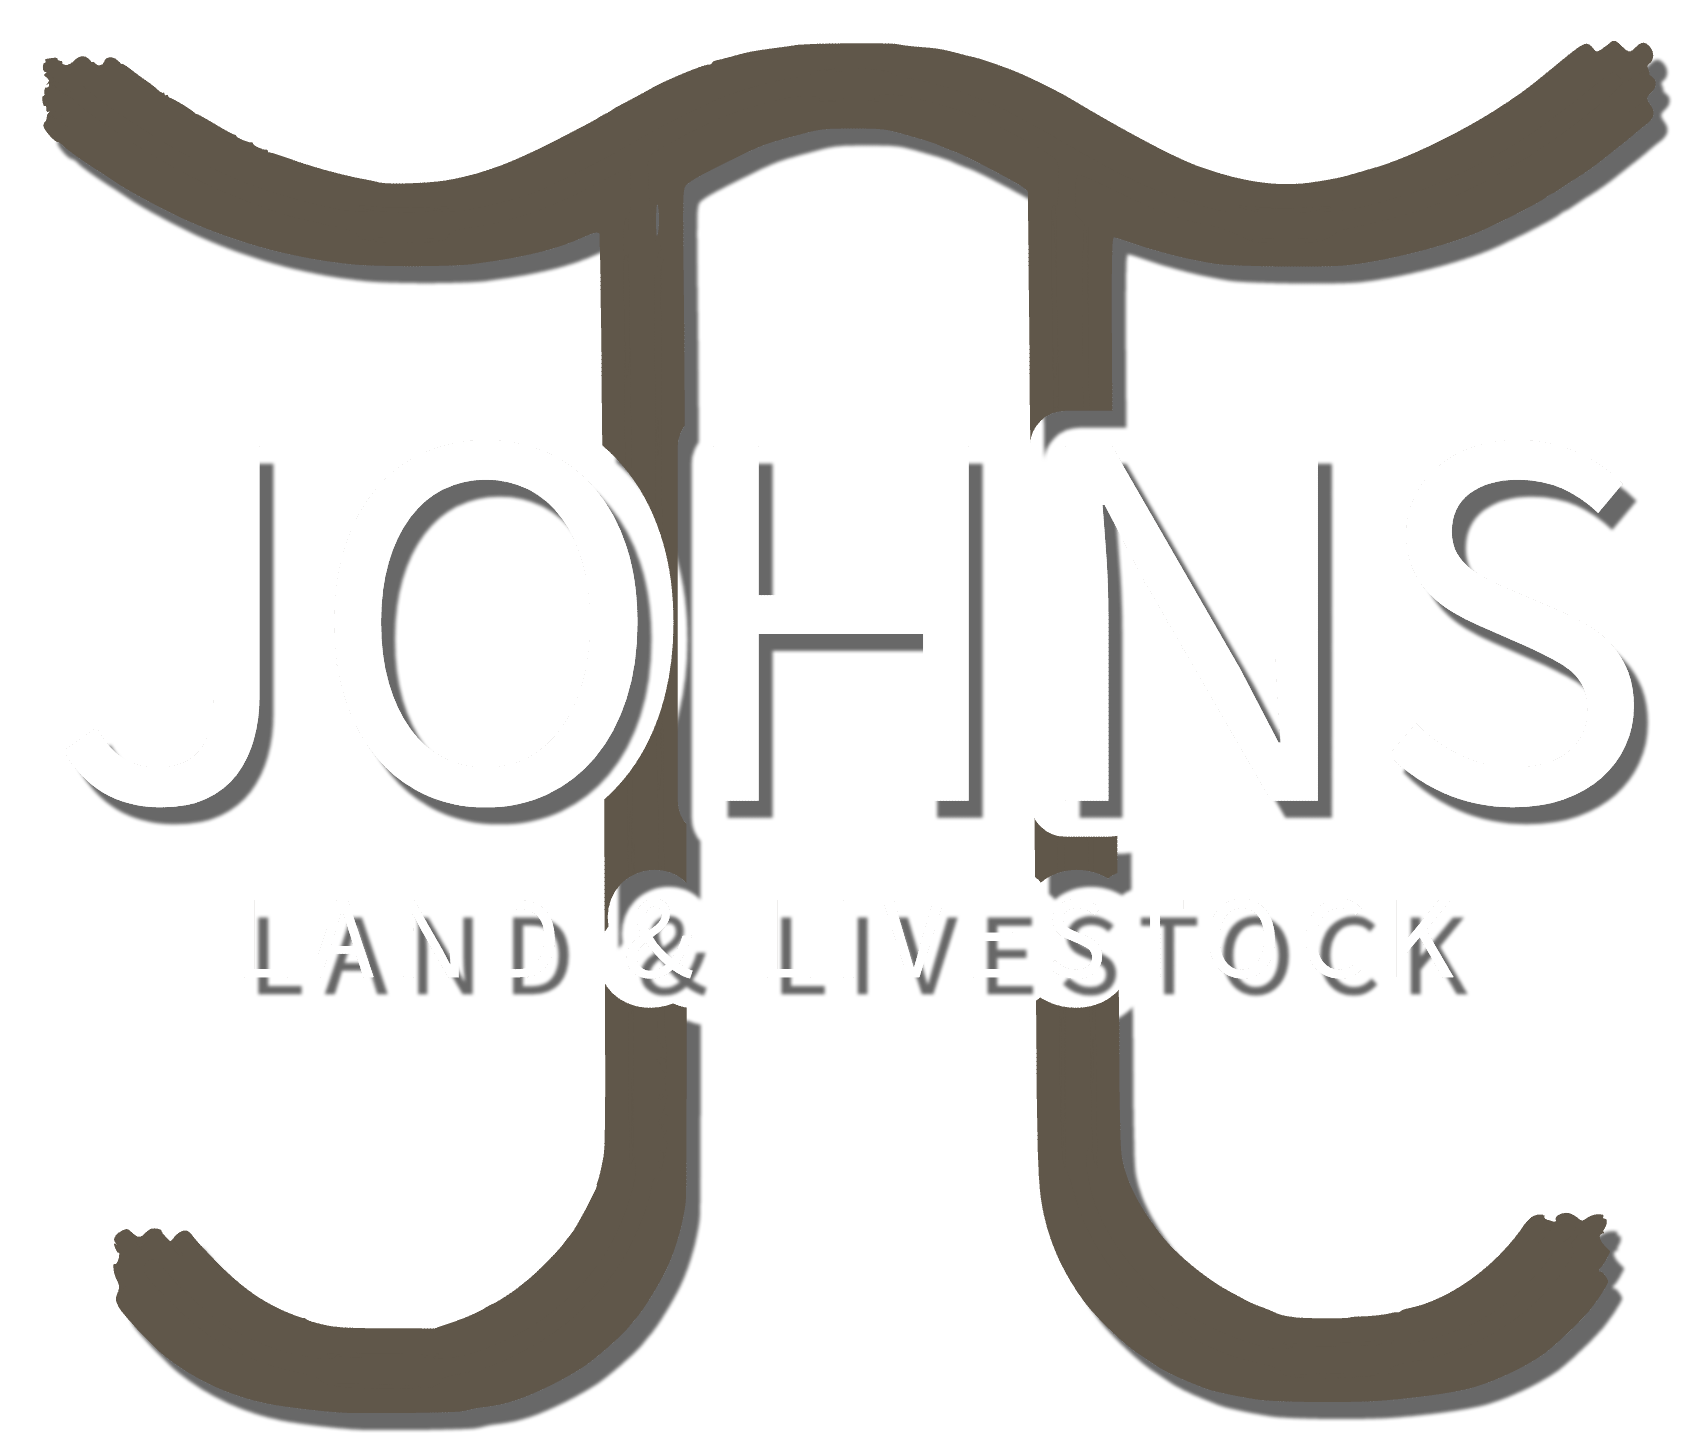 Johns Land & Livestock logo